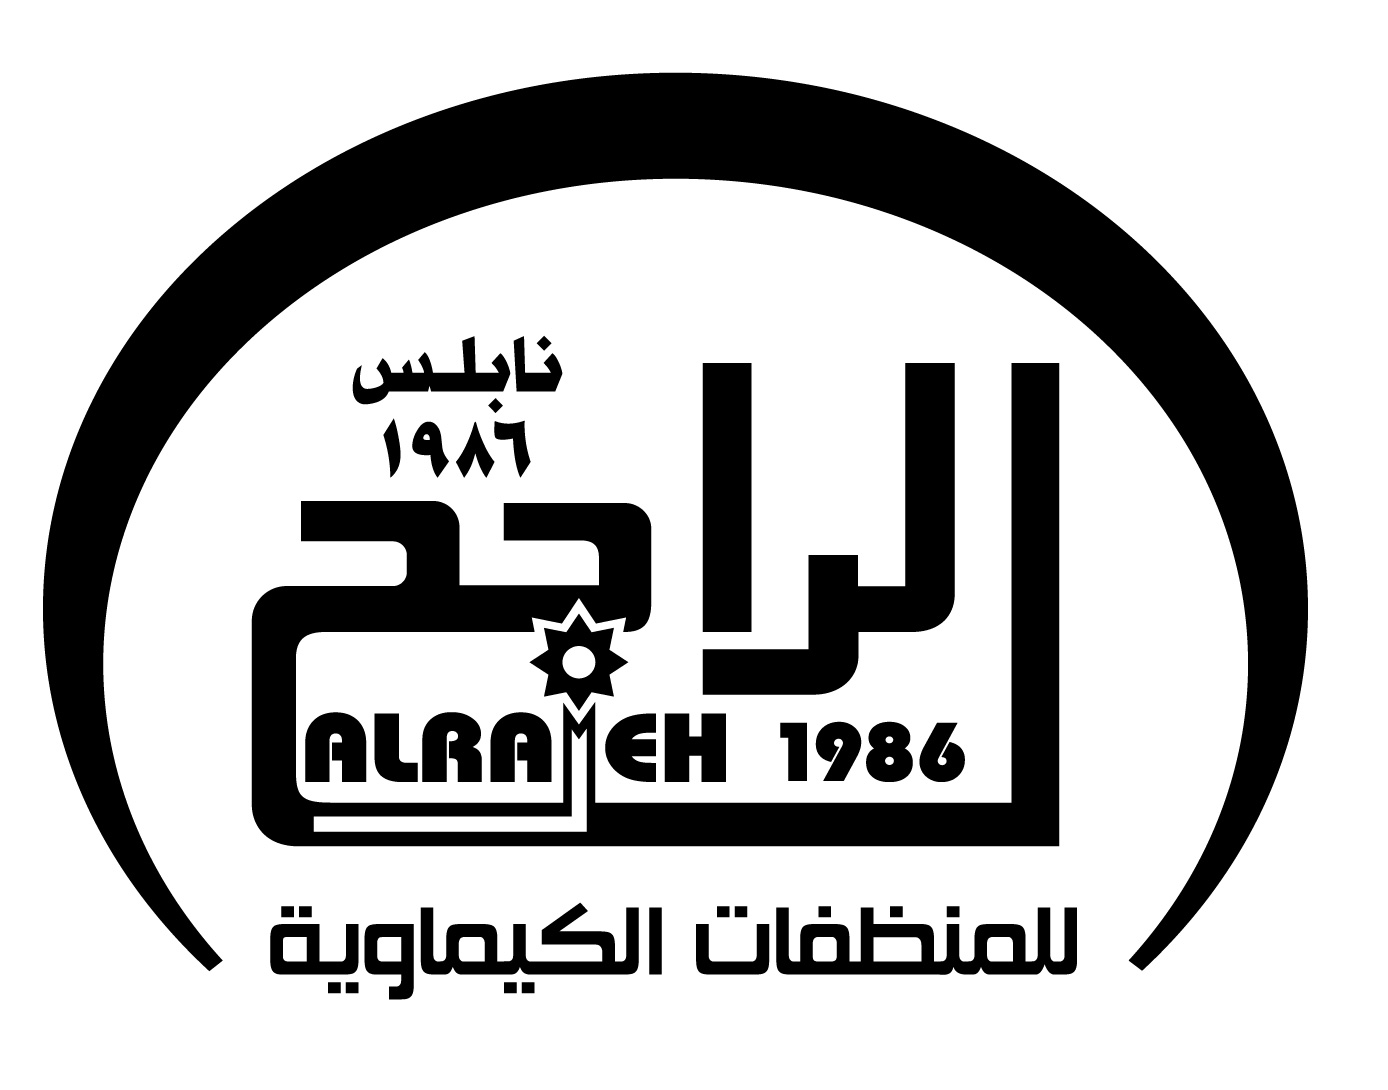 Al Rajeh  Detergents Factory